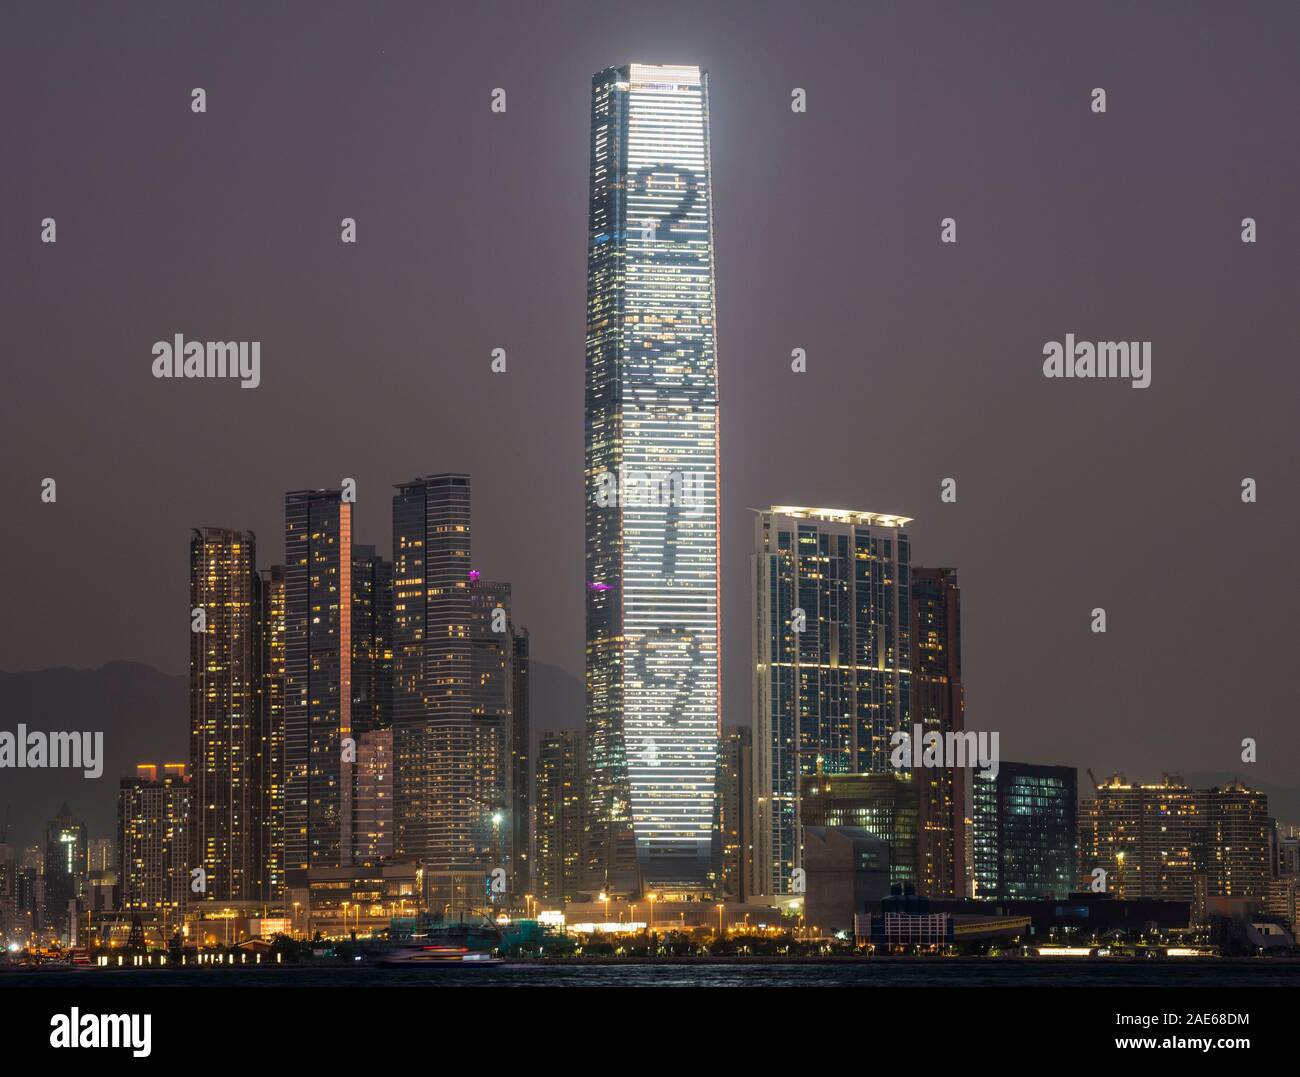 Hong Kong tallest building the International Commerce Center ICC, lights up for Christmas 2019, Hong Kong, China. Stock Photo